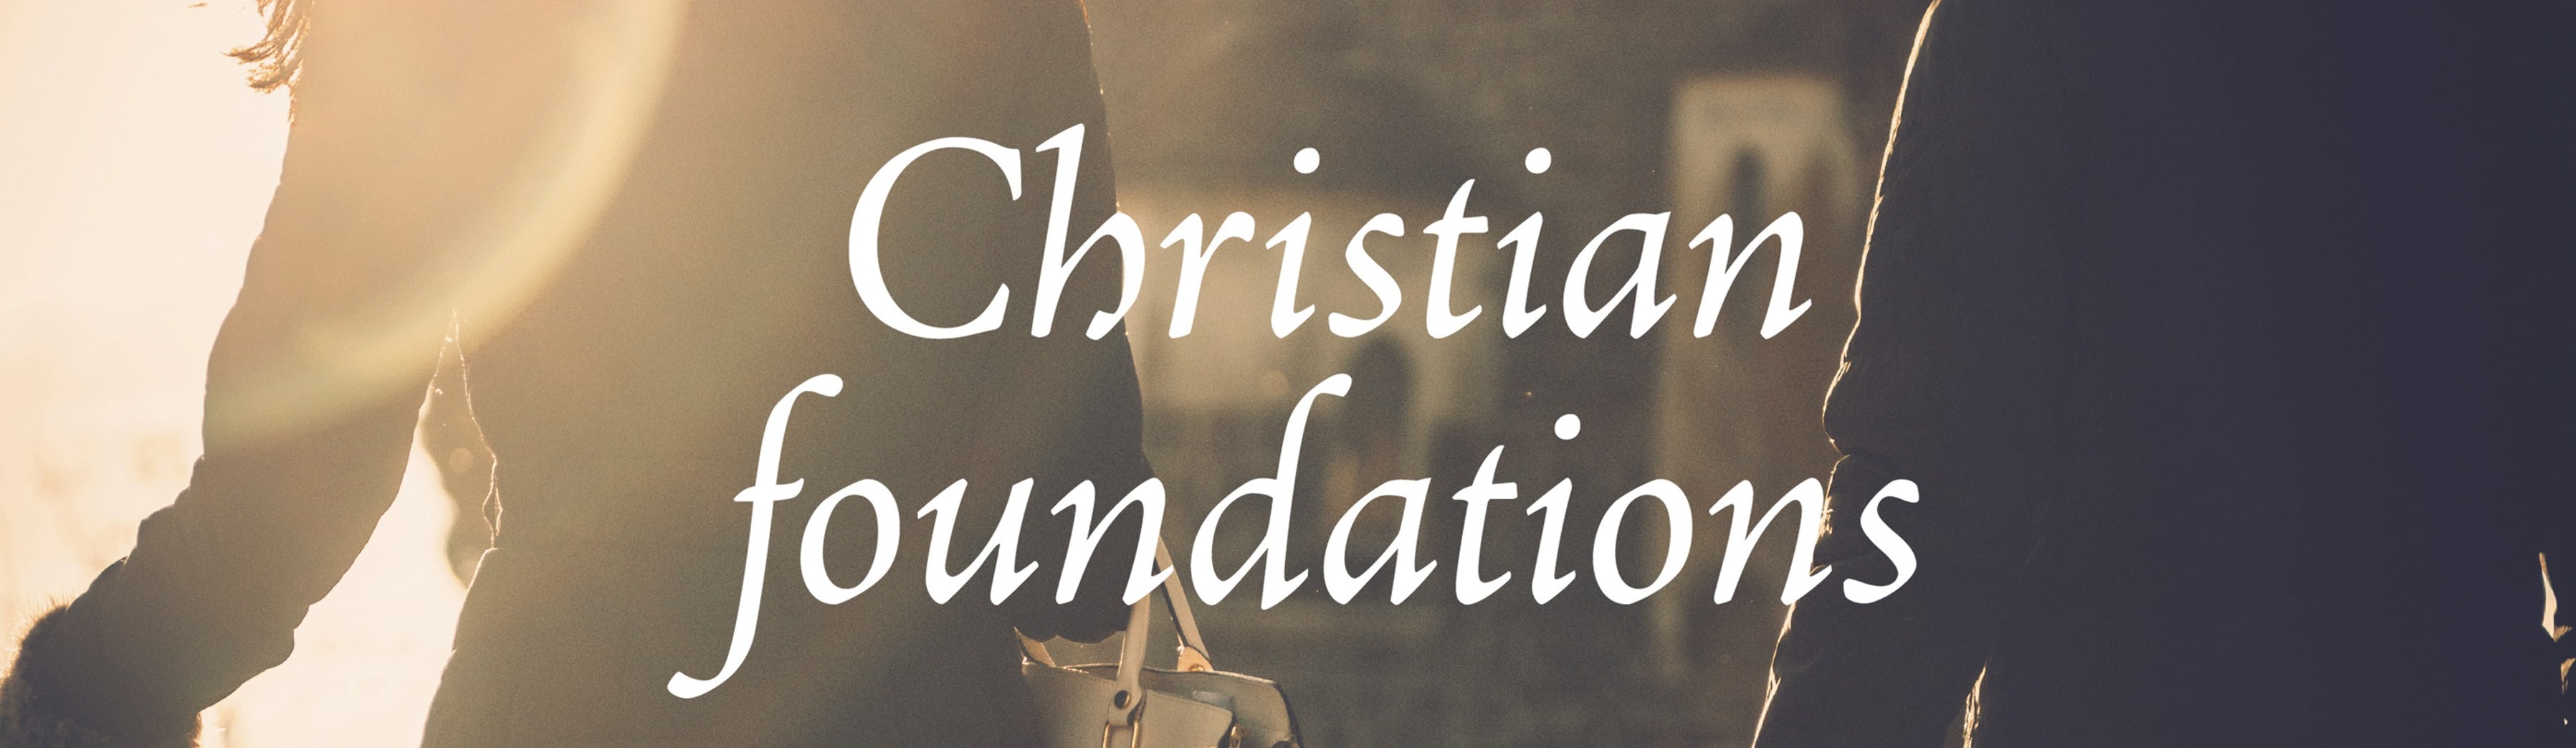 Christian Foundations banner